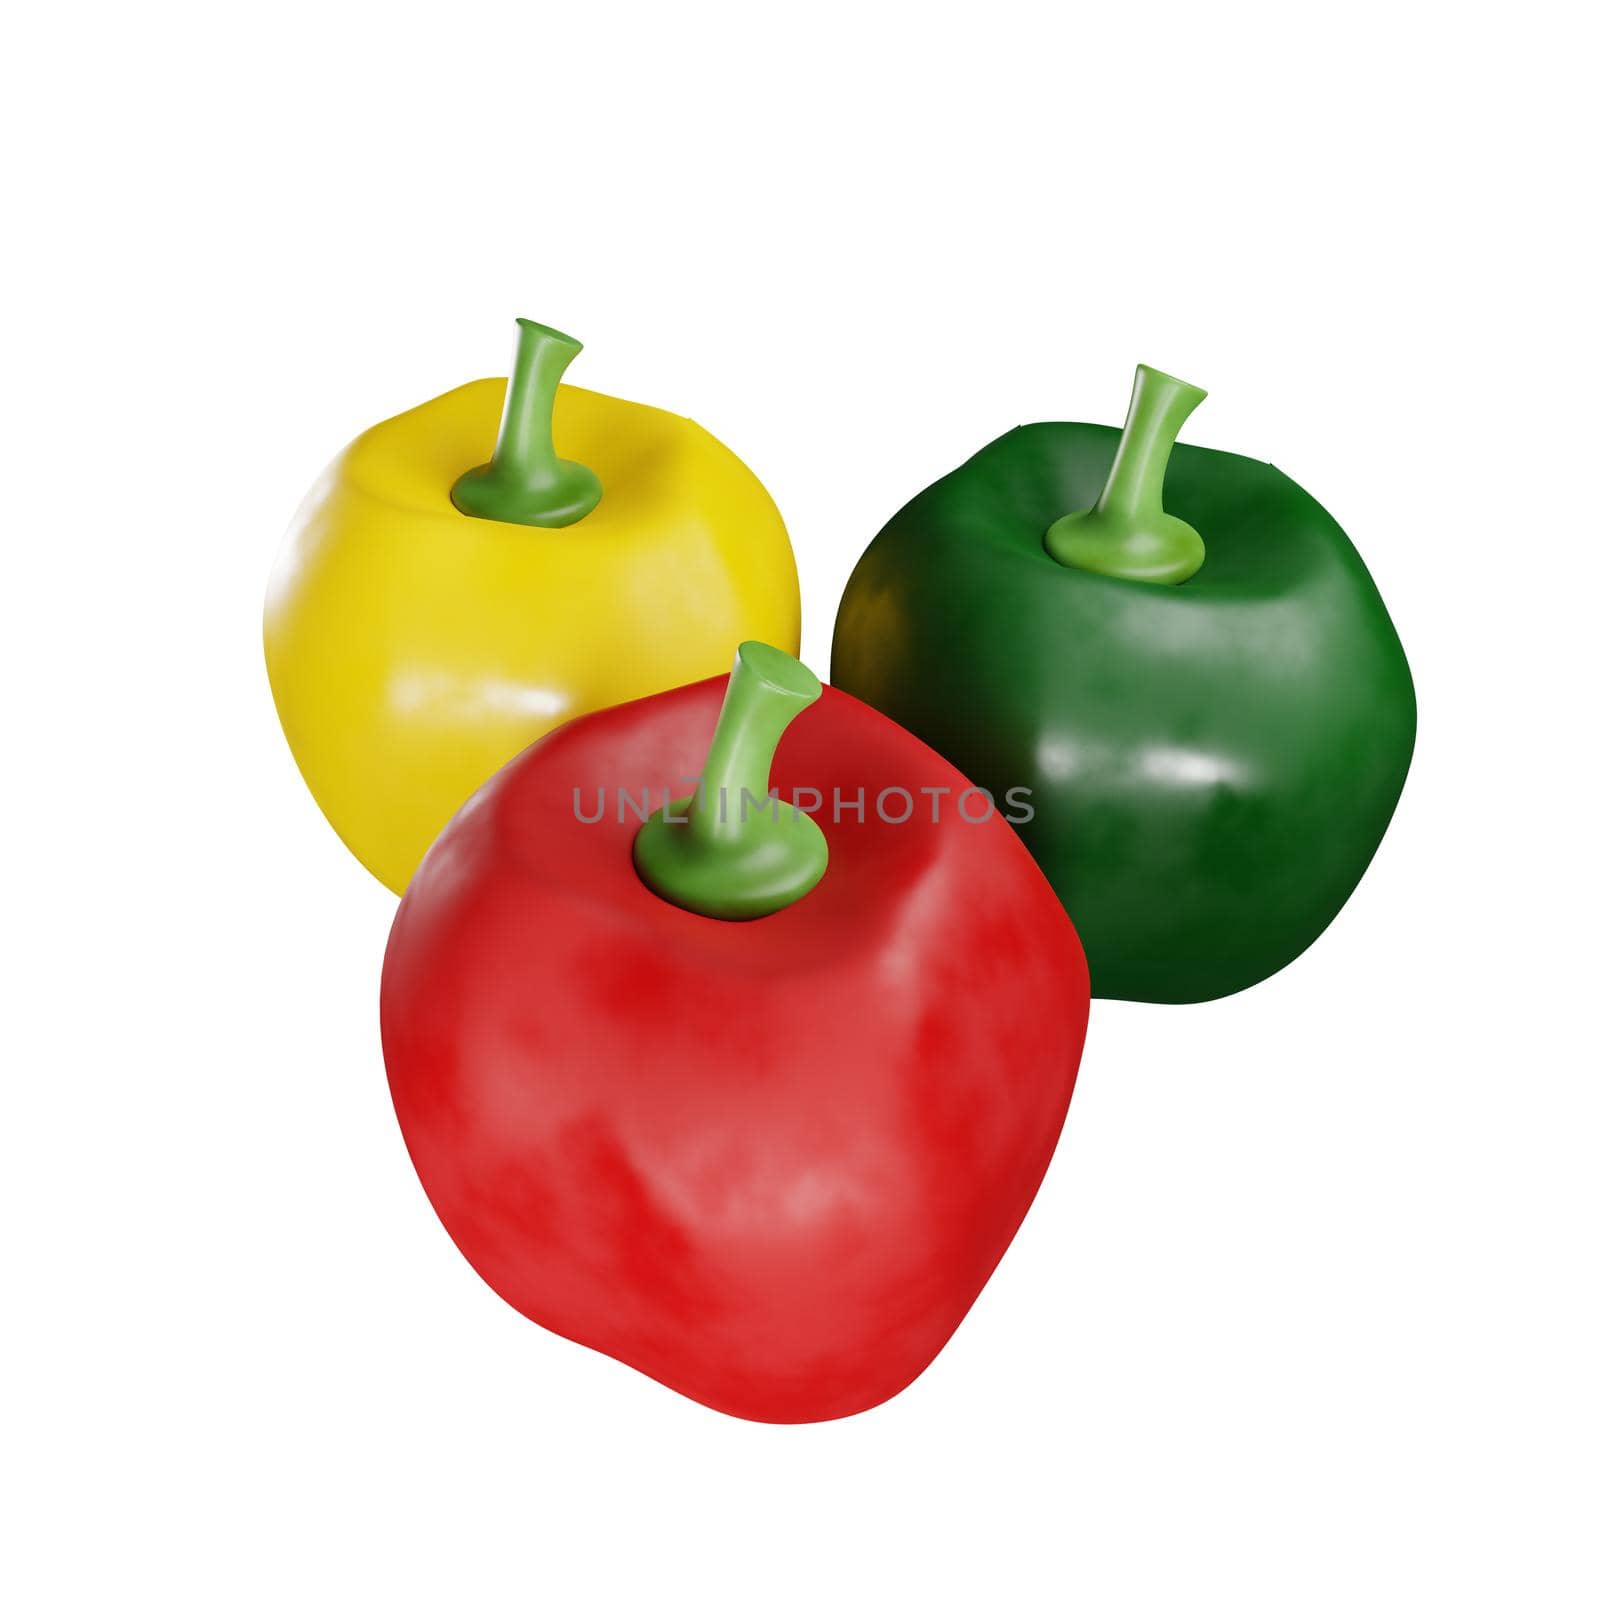 peppers of various colors by Rahmat_Djayusman